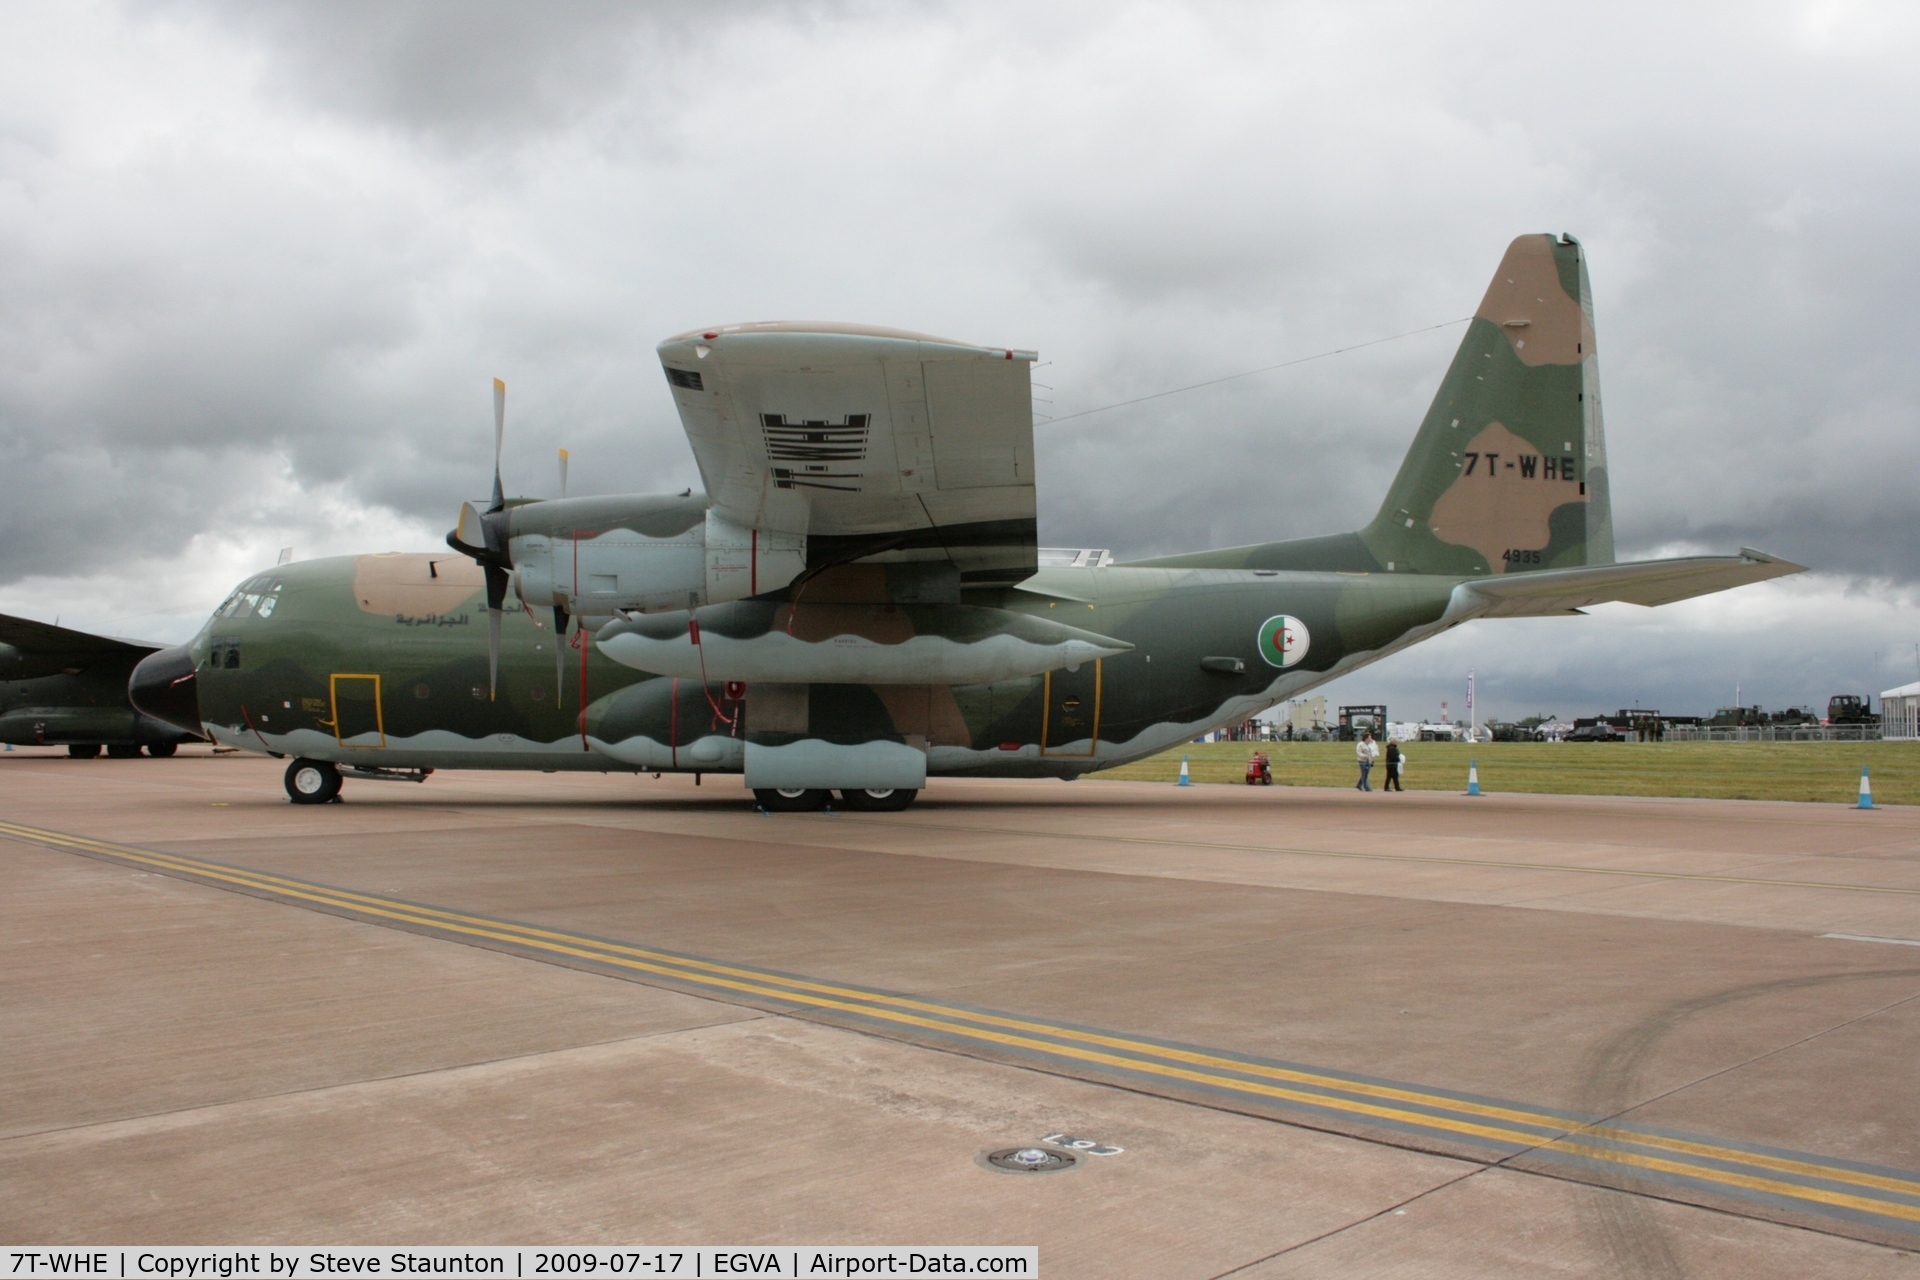 7T-WHE, 1982 Lockheed C-130H-30 Hercules C/N 382-4935, Taken at the Royal International Air Tattoo 2009